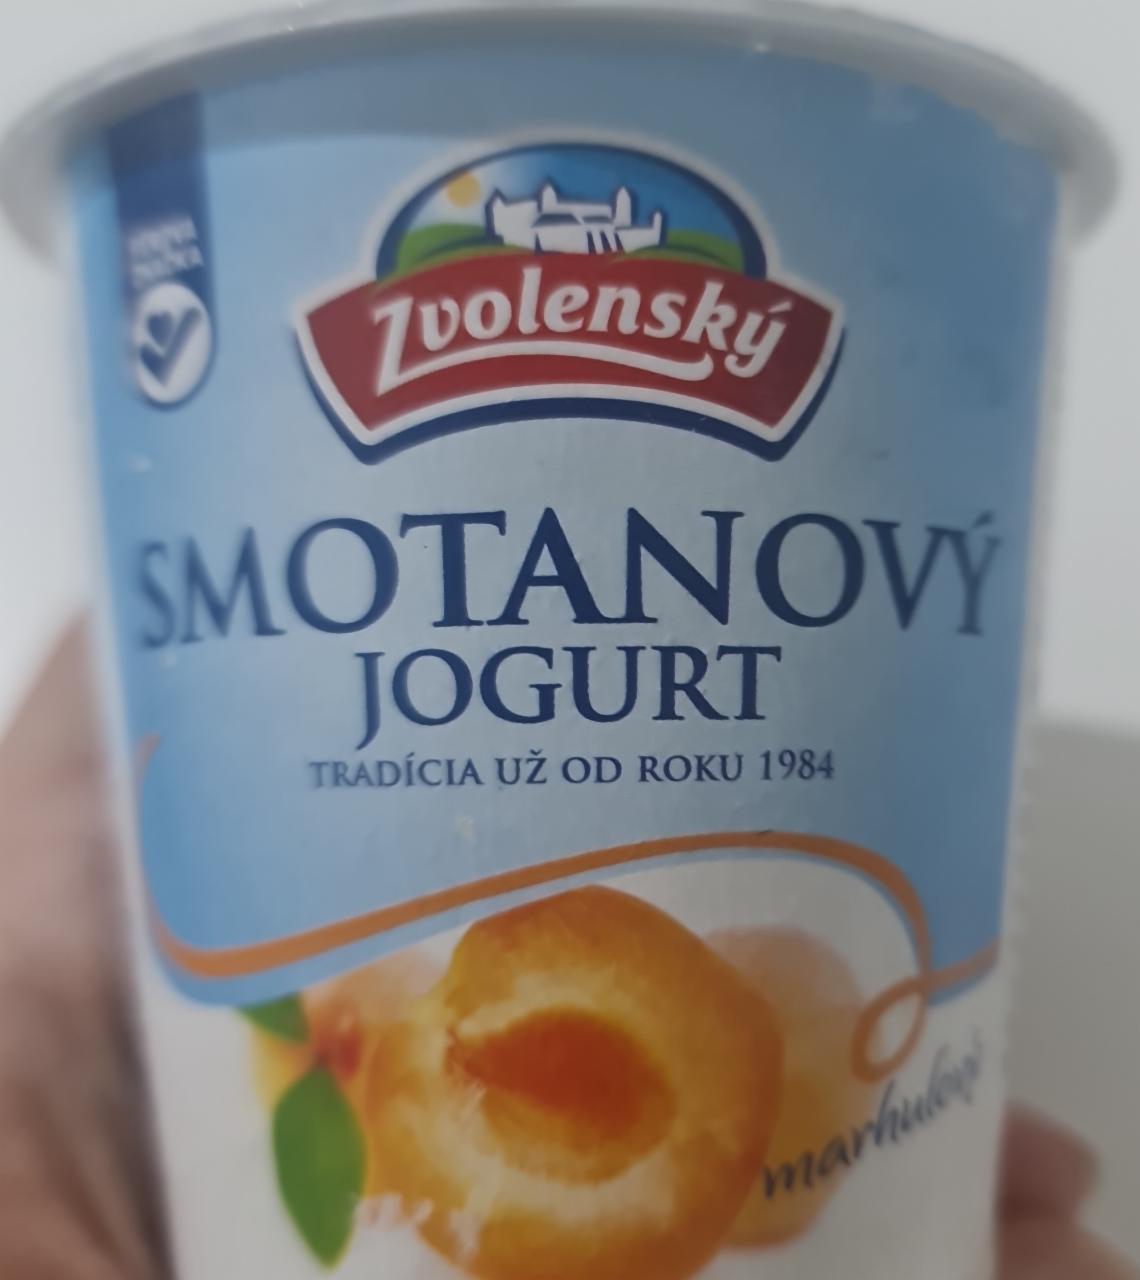 Képek - Smotanový jogurt marhuľový Zvolenský